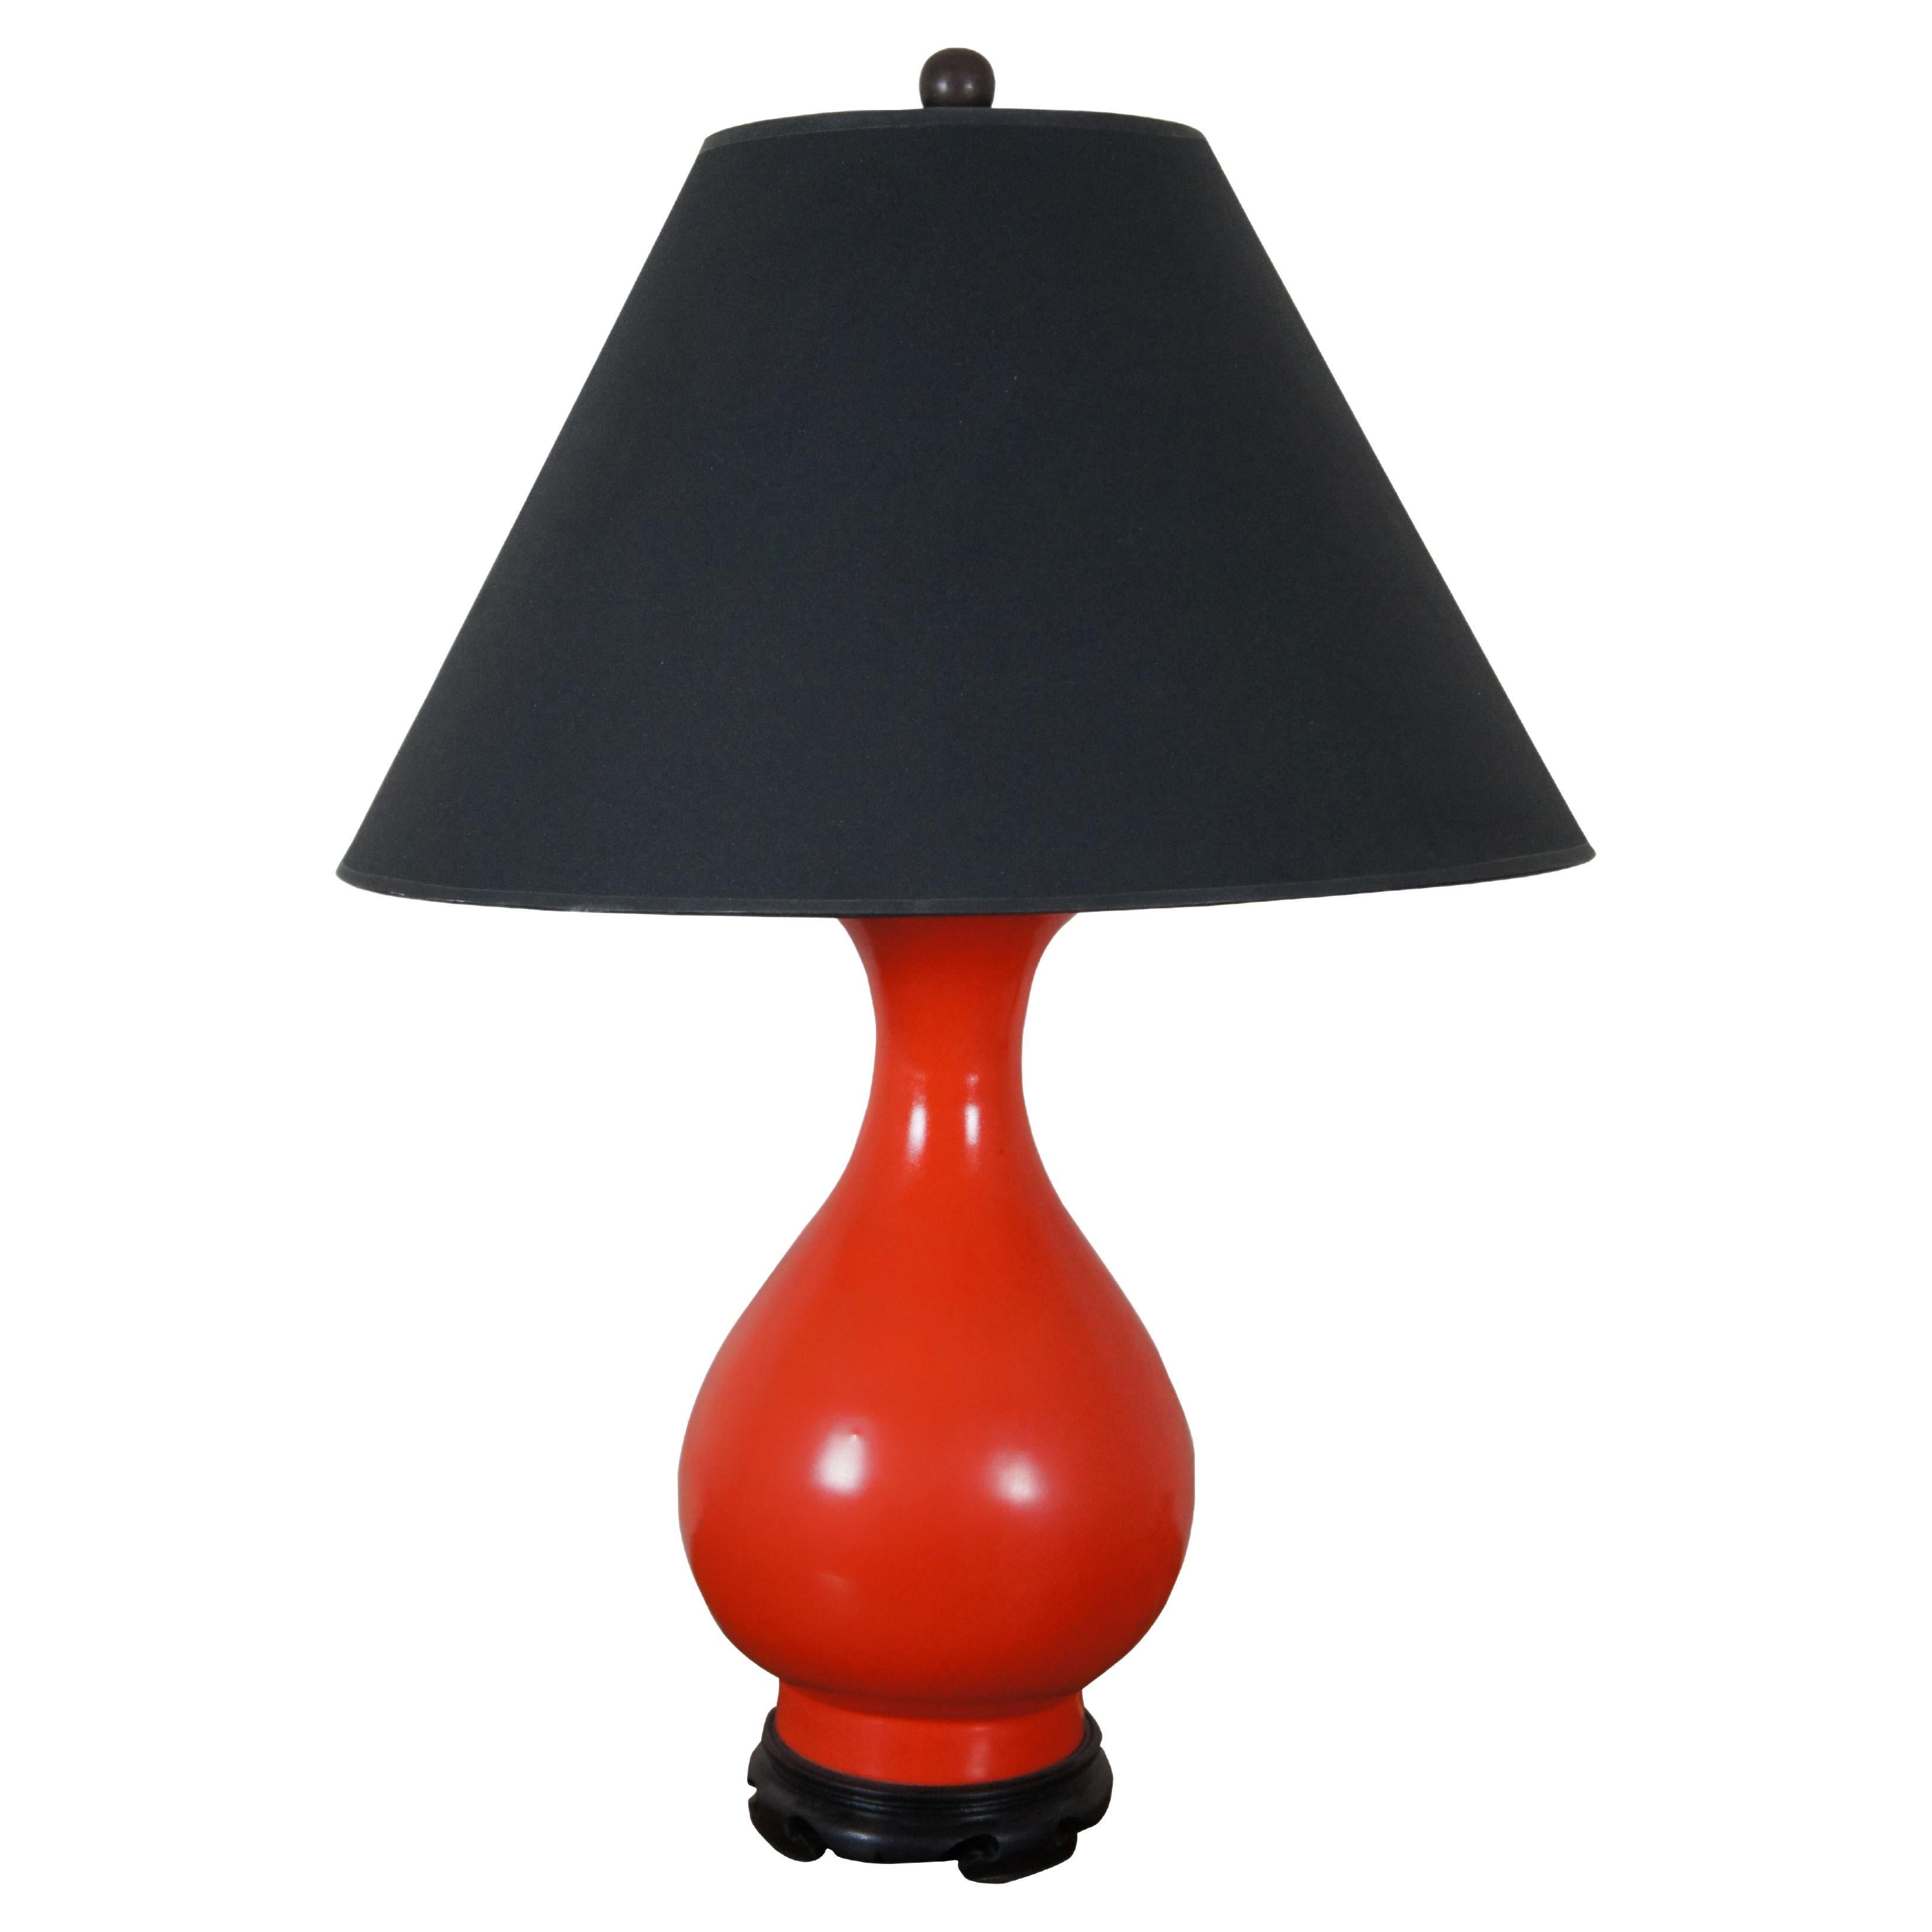 Windermere Lotus Arts Chinoiserie Orange Ceramic Mantel Vase Urn lamp 30" For Sale